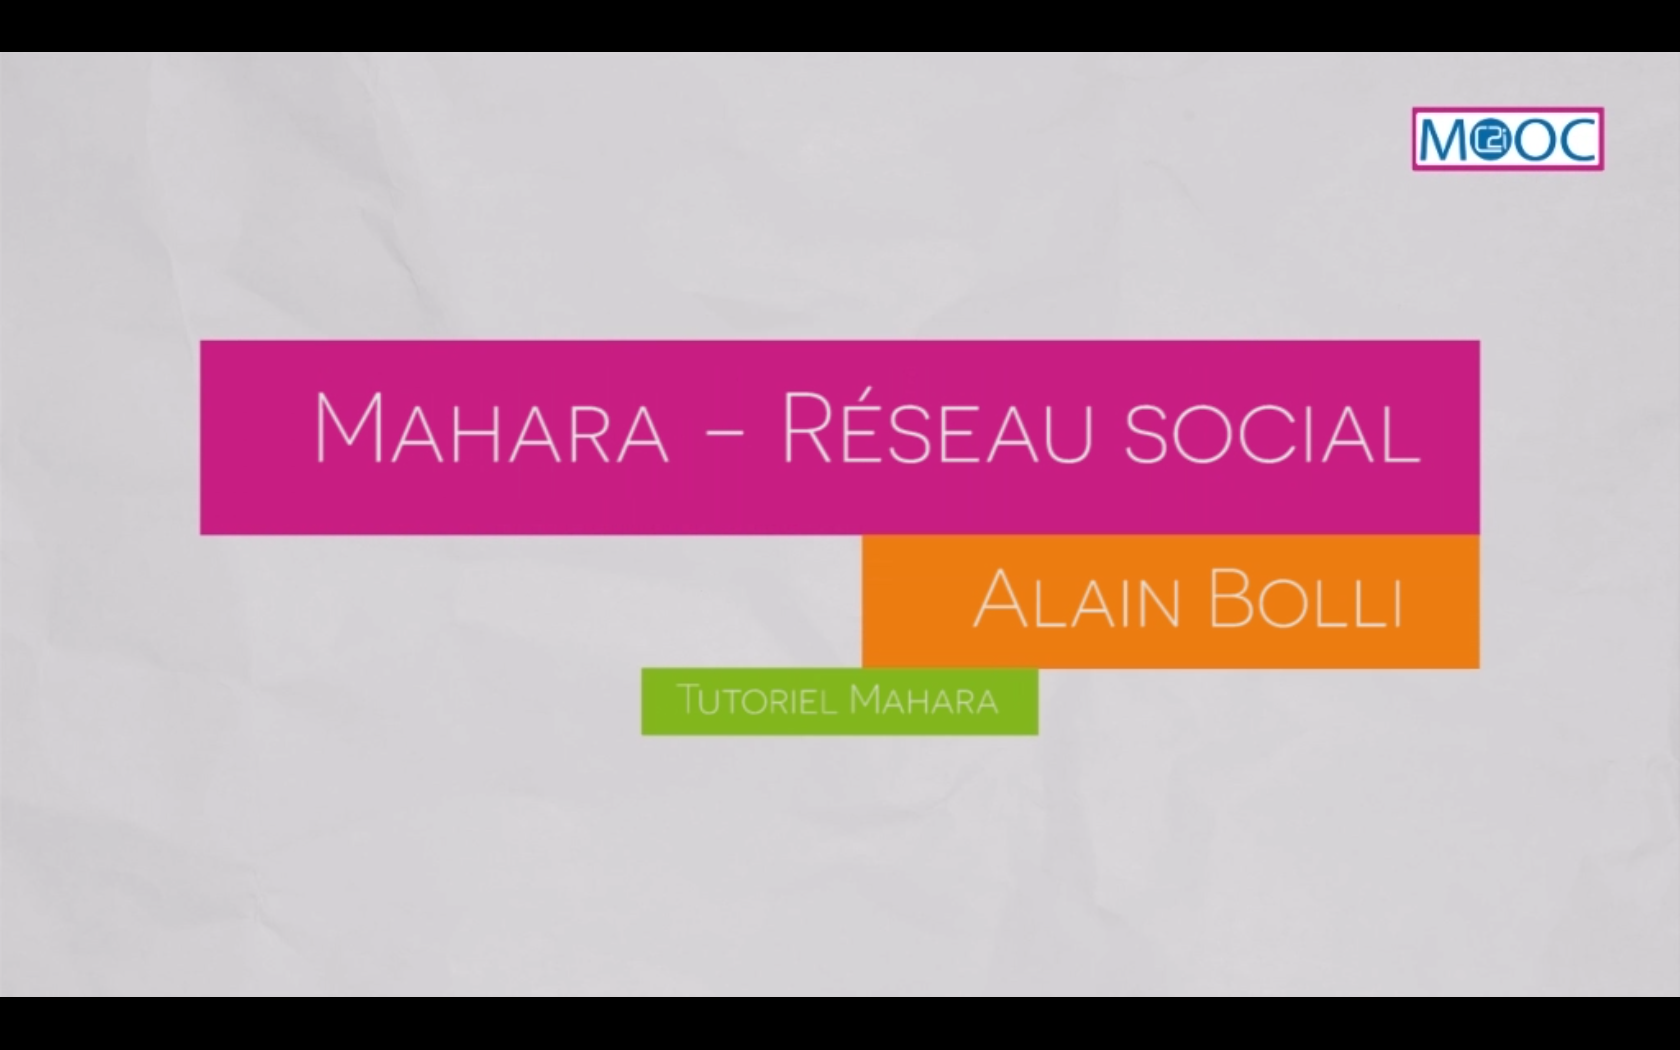 Mahara - Réseau social